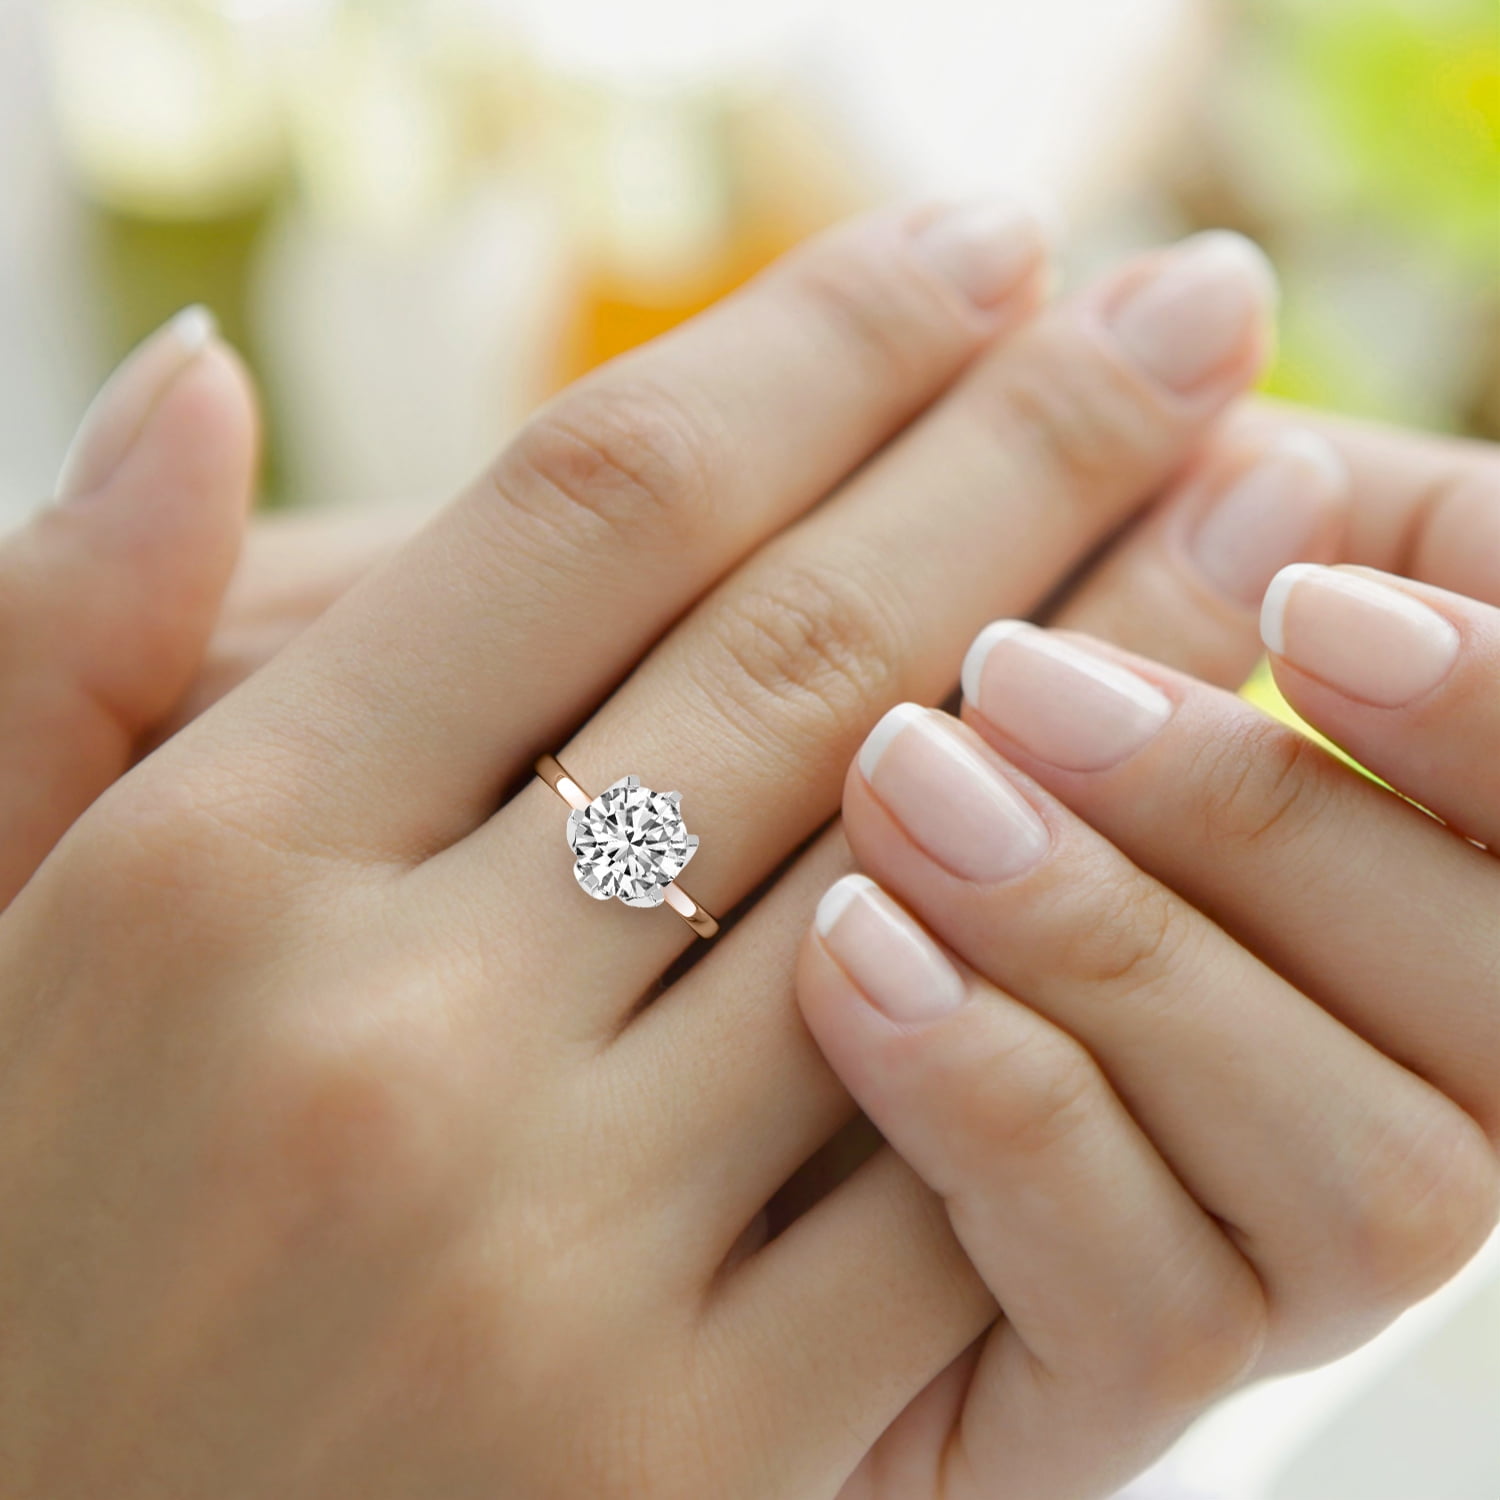 2.62 carat Radiant Cut Diamond Halo Three-Row Ring | Lauren B Jewelry